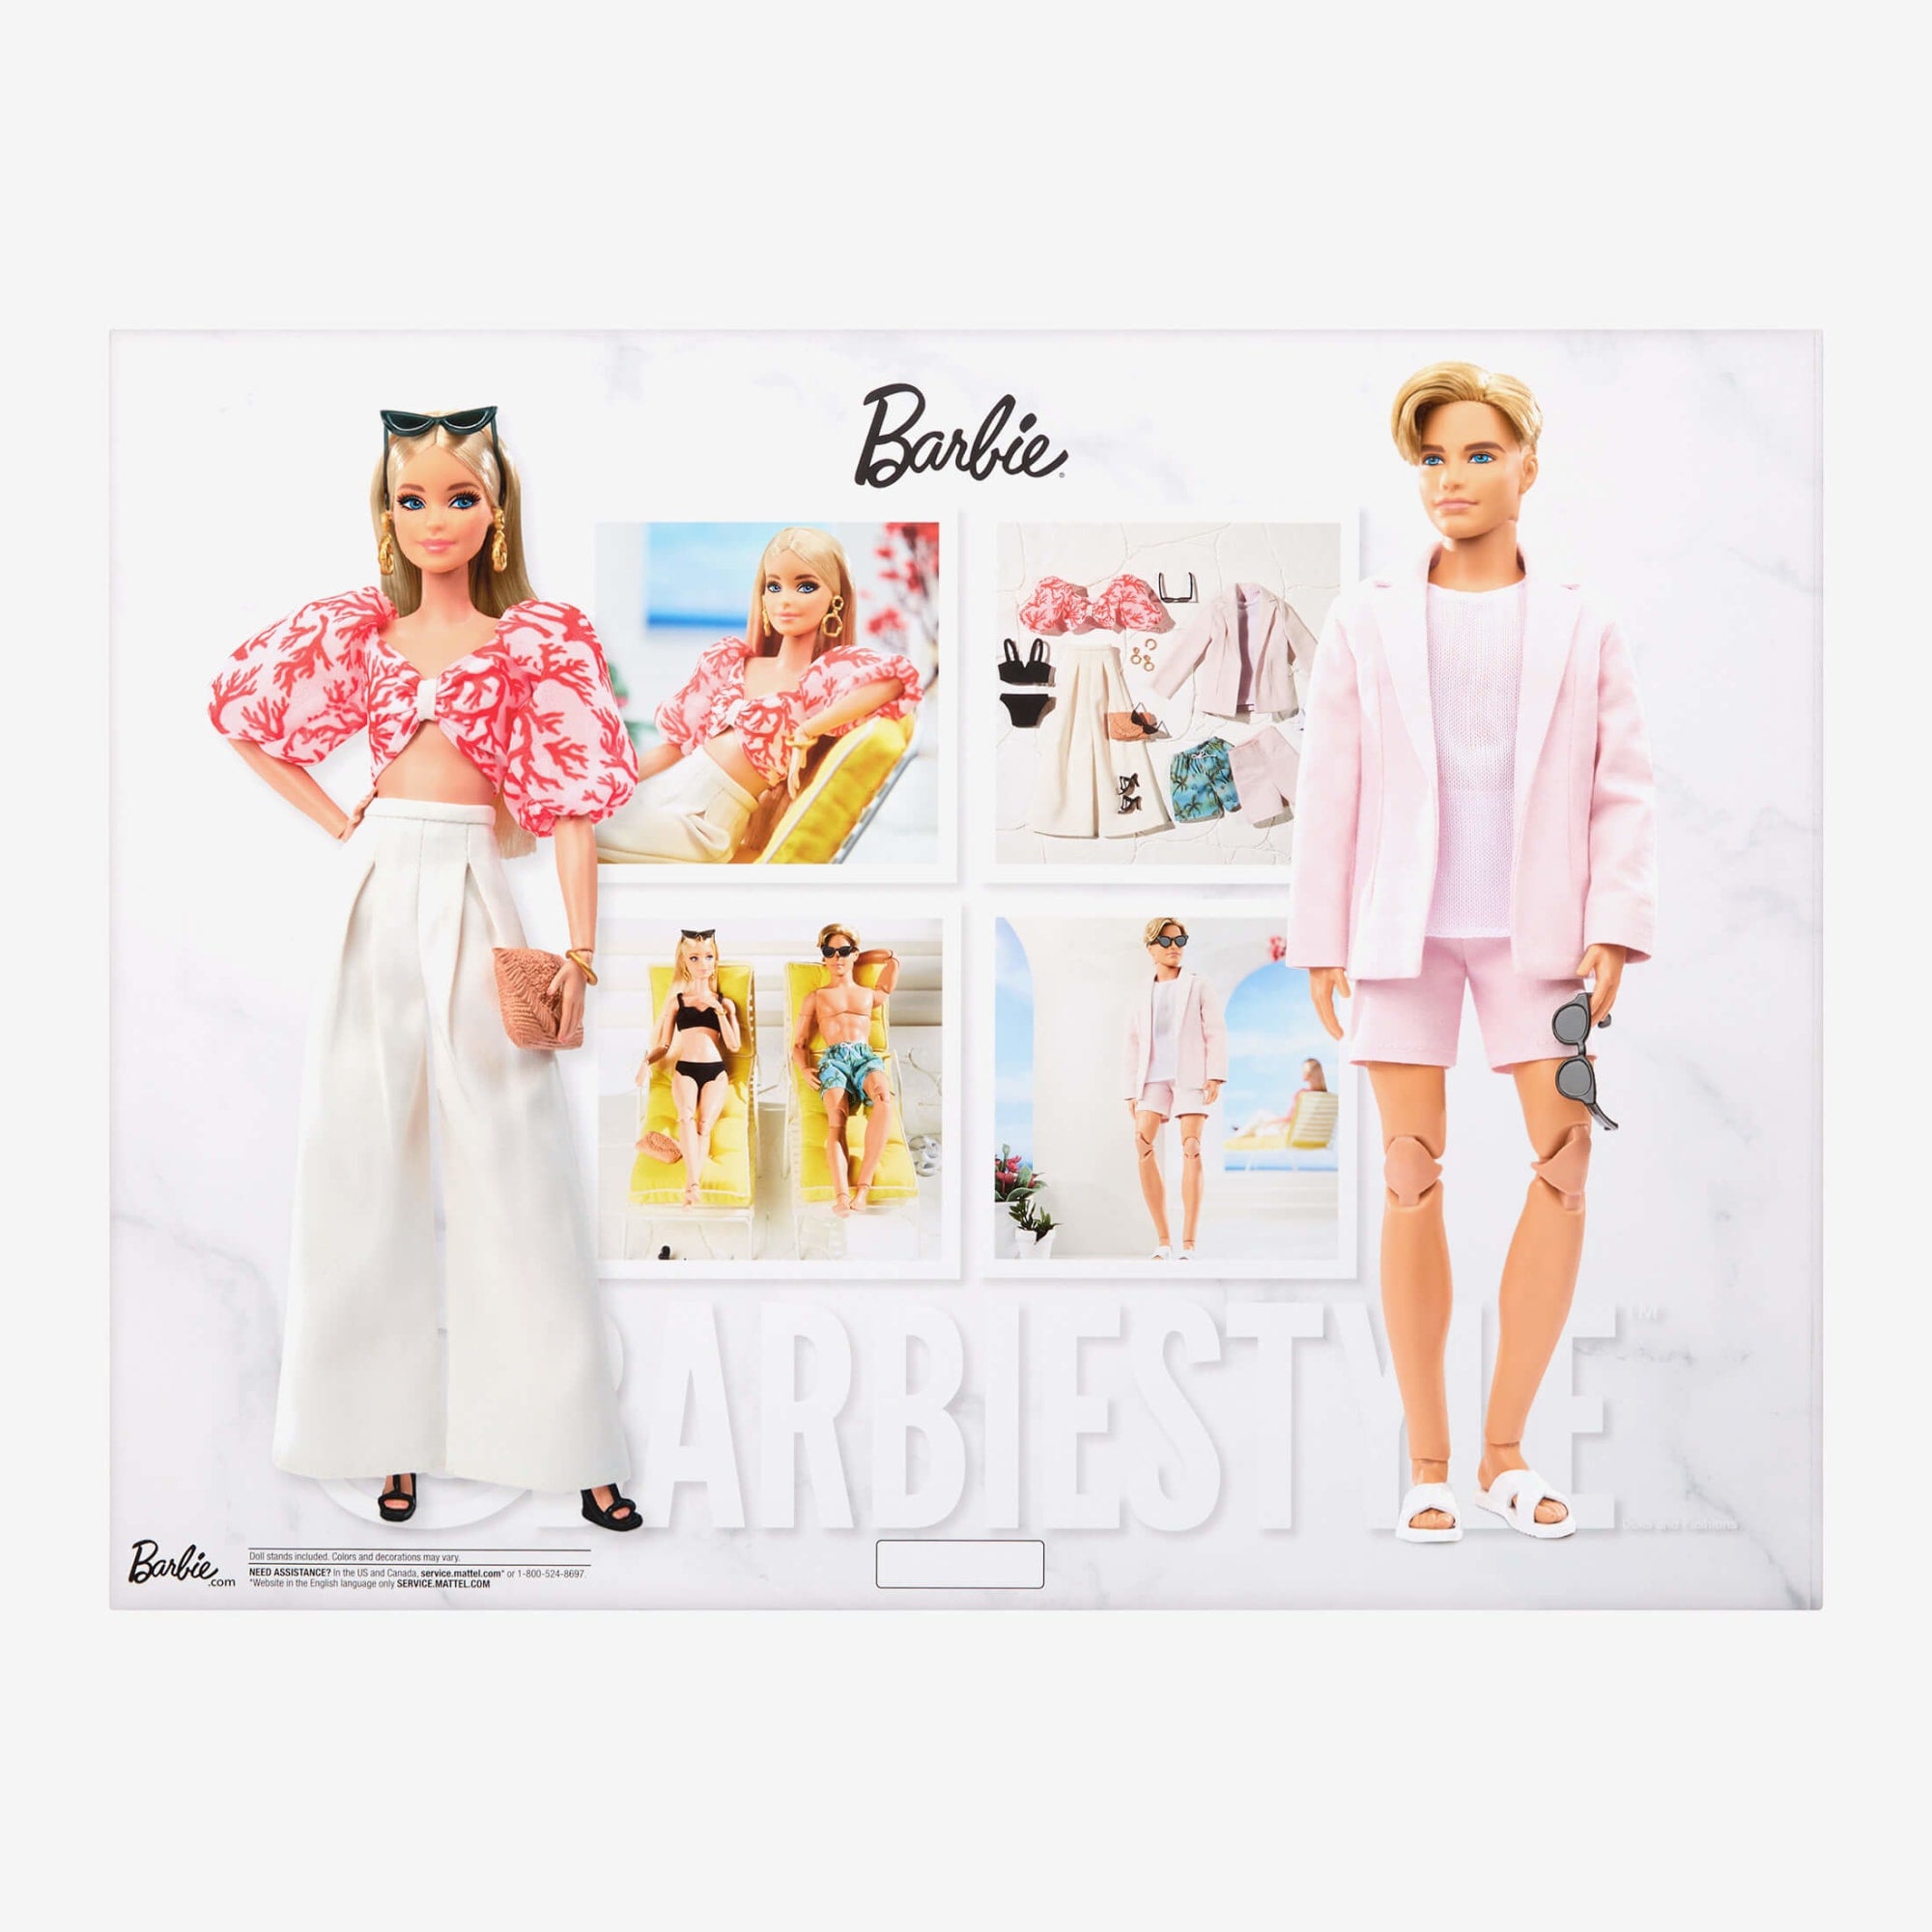 Barbie - Set @BarbieStyle Barbie e Ken, 2 bambole da collezione